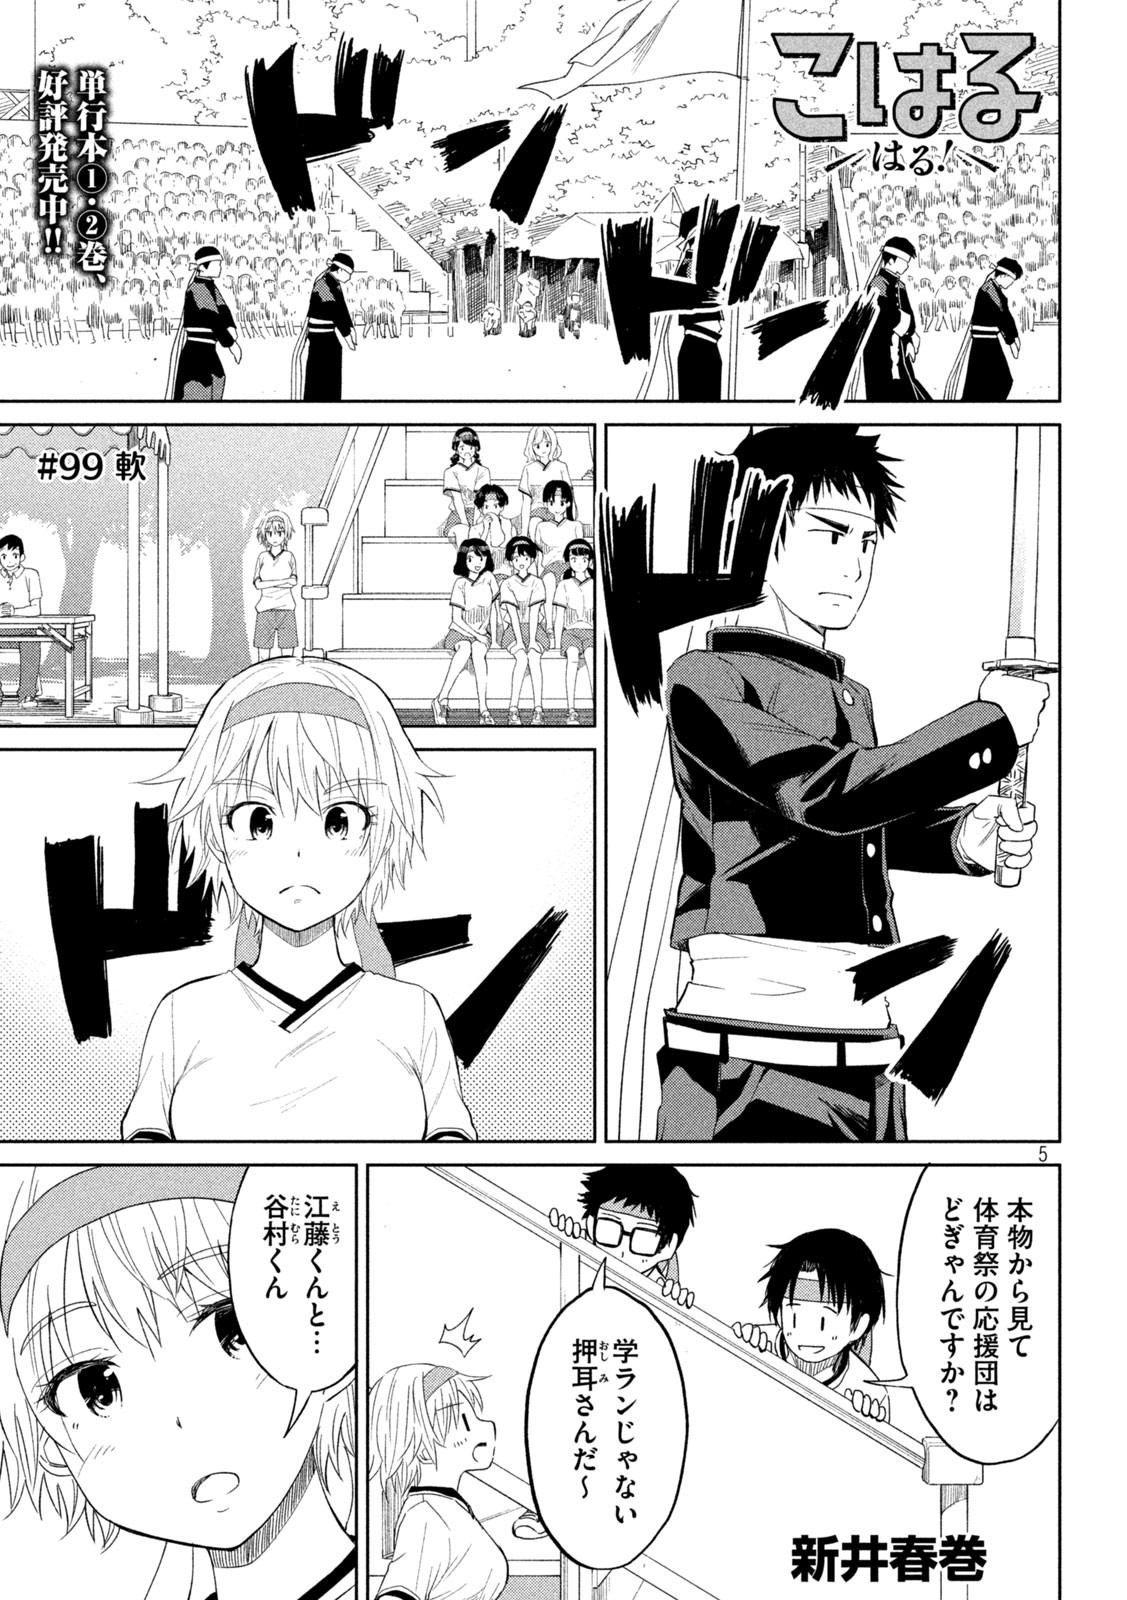 Koharu haru! - Chapter 99 - Page 1